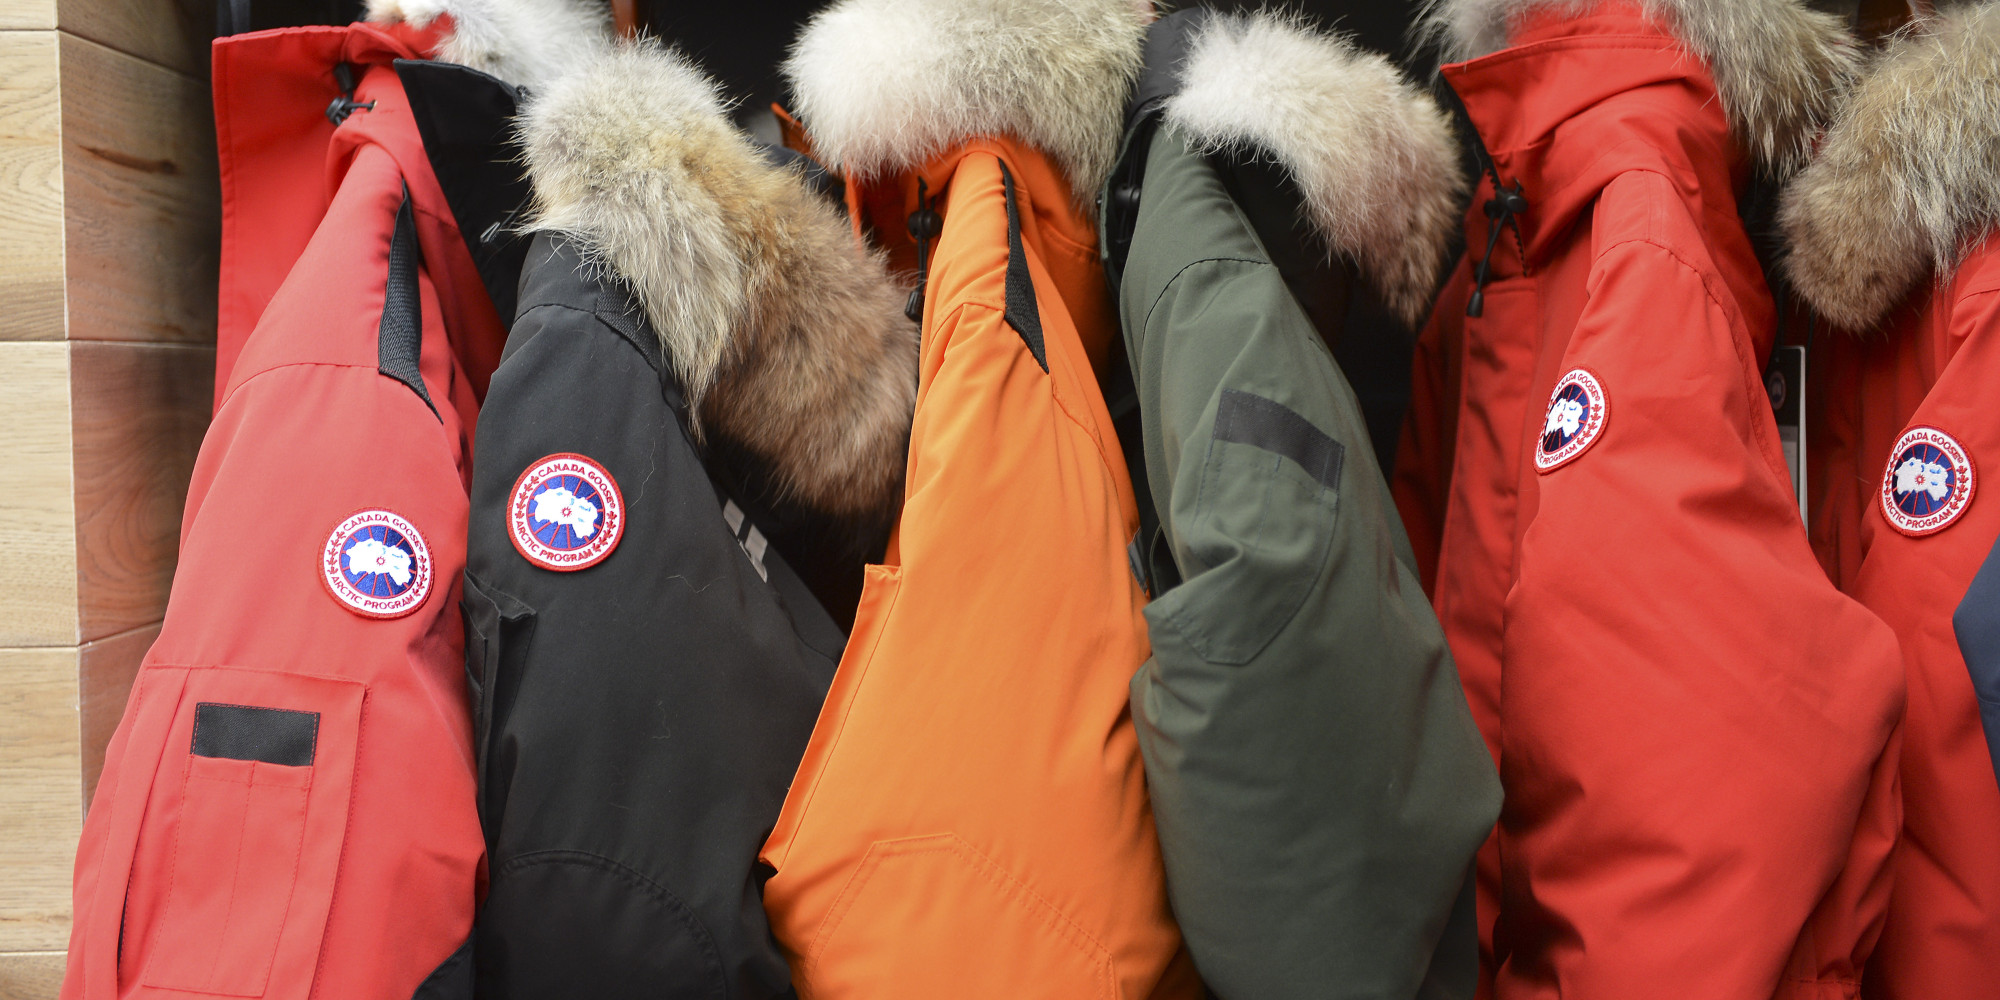 Canada Goose parka replica cheap - Canada Goose Jackets Keep Getting Stolen At Boston University